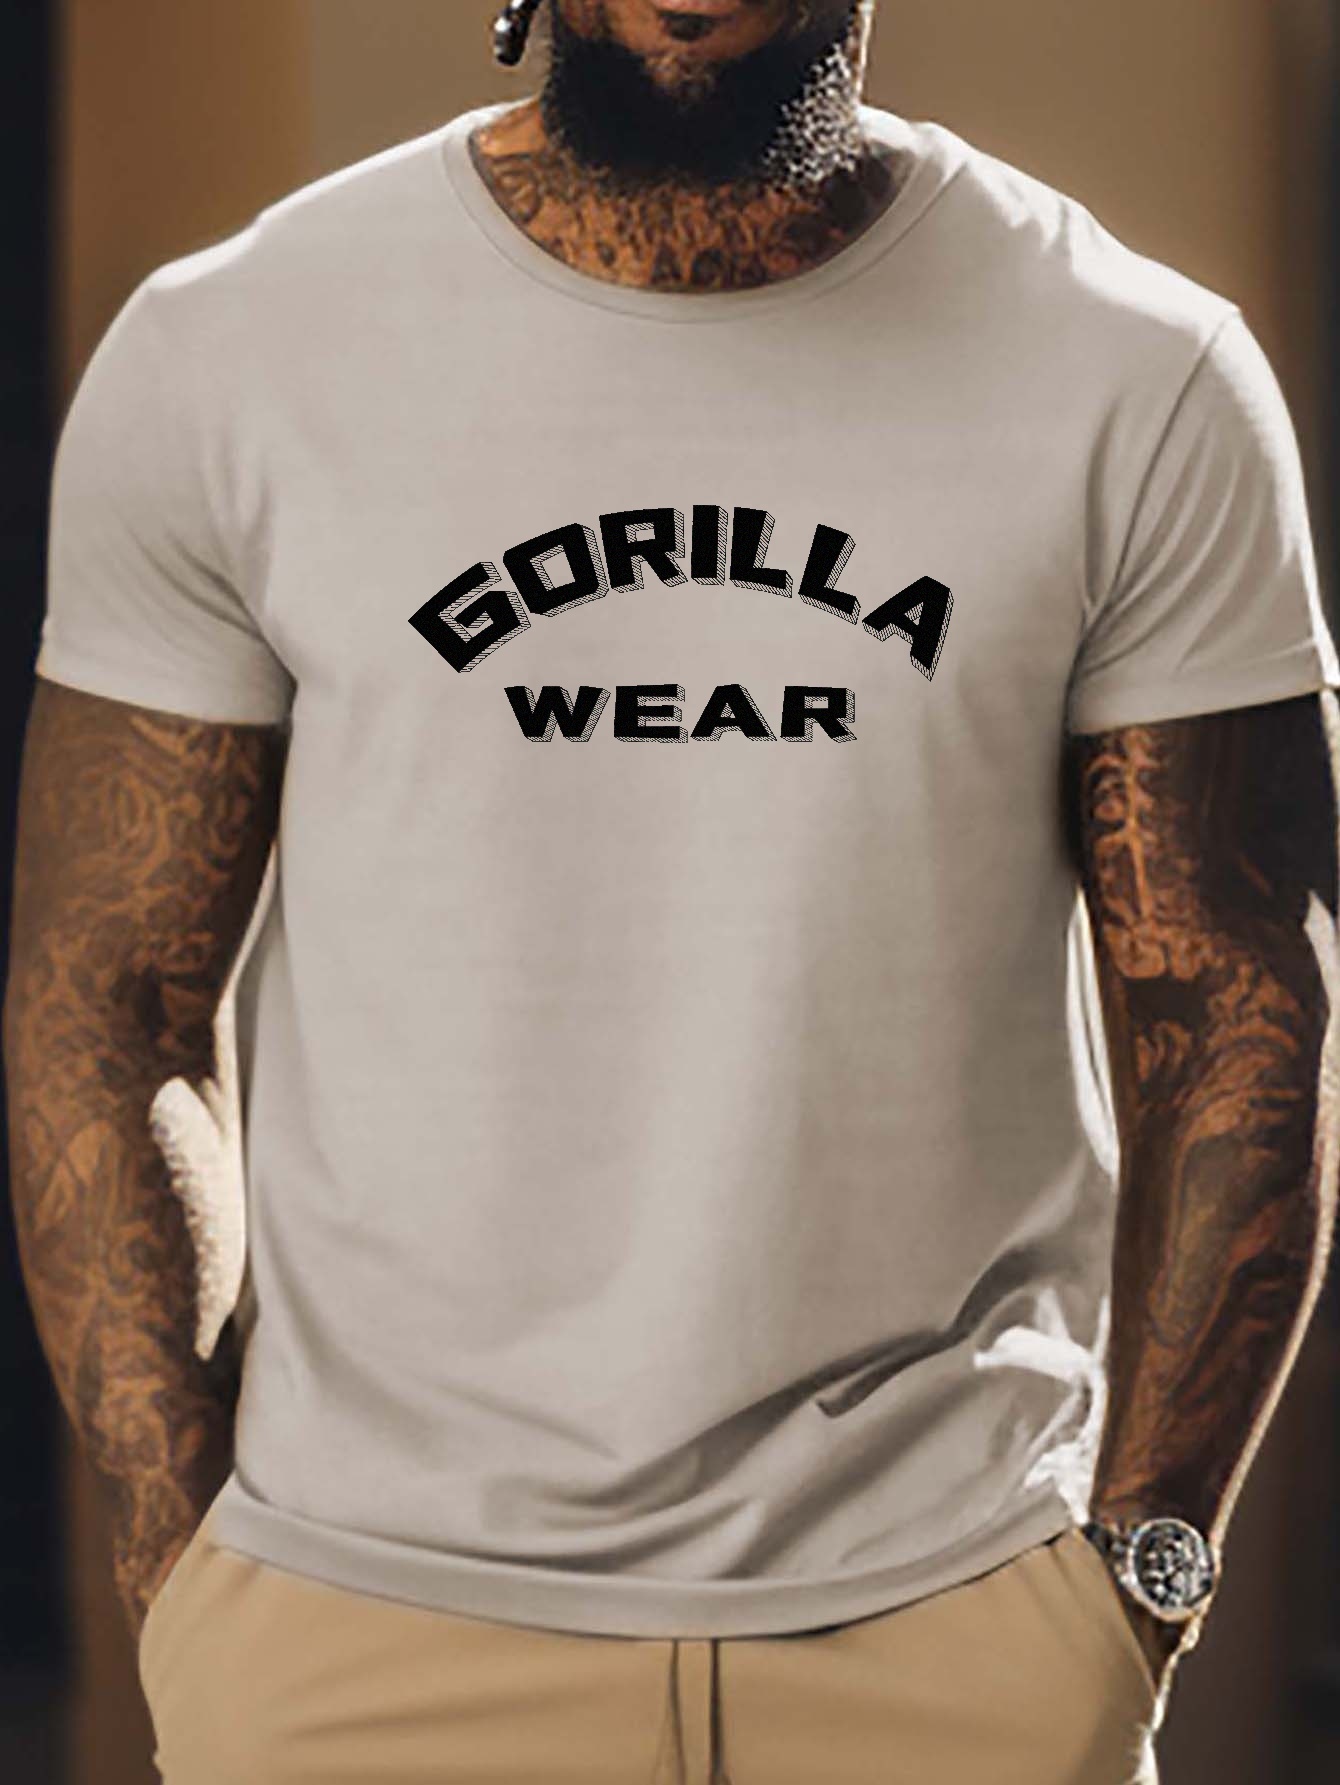 GORILLA WEAR MENS CLOTHING